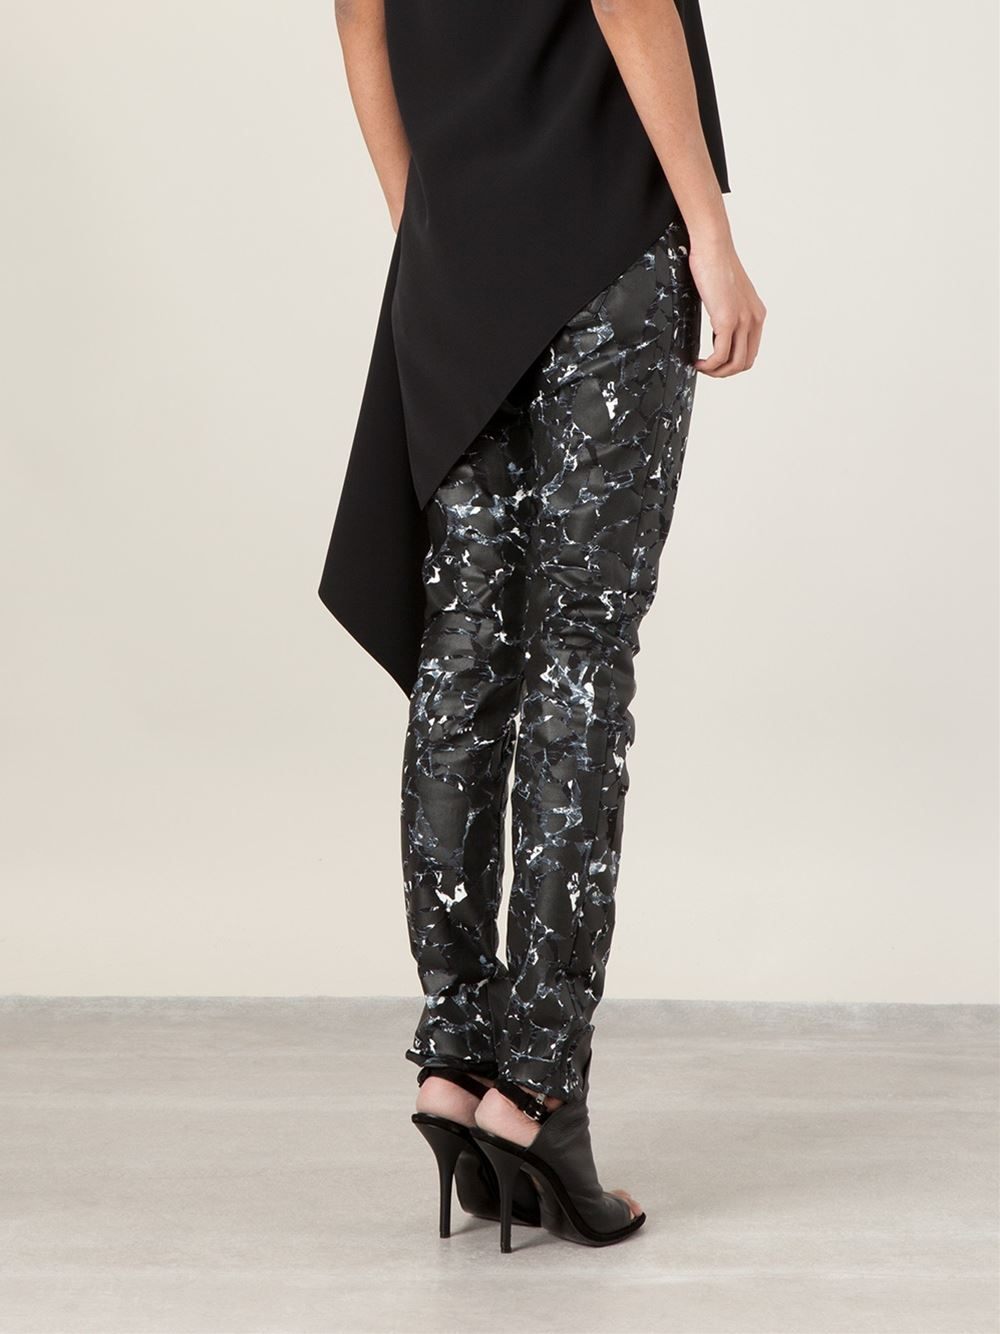 Balenciaga Marble Print Trousers in Black - Lyst